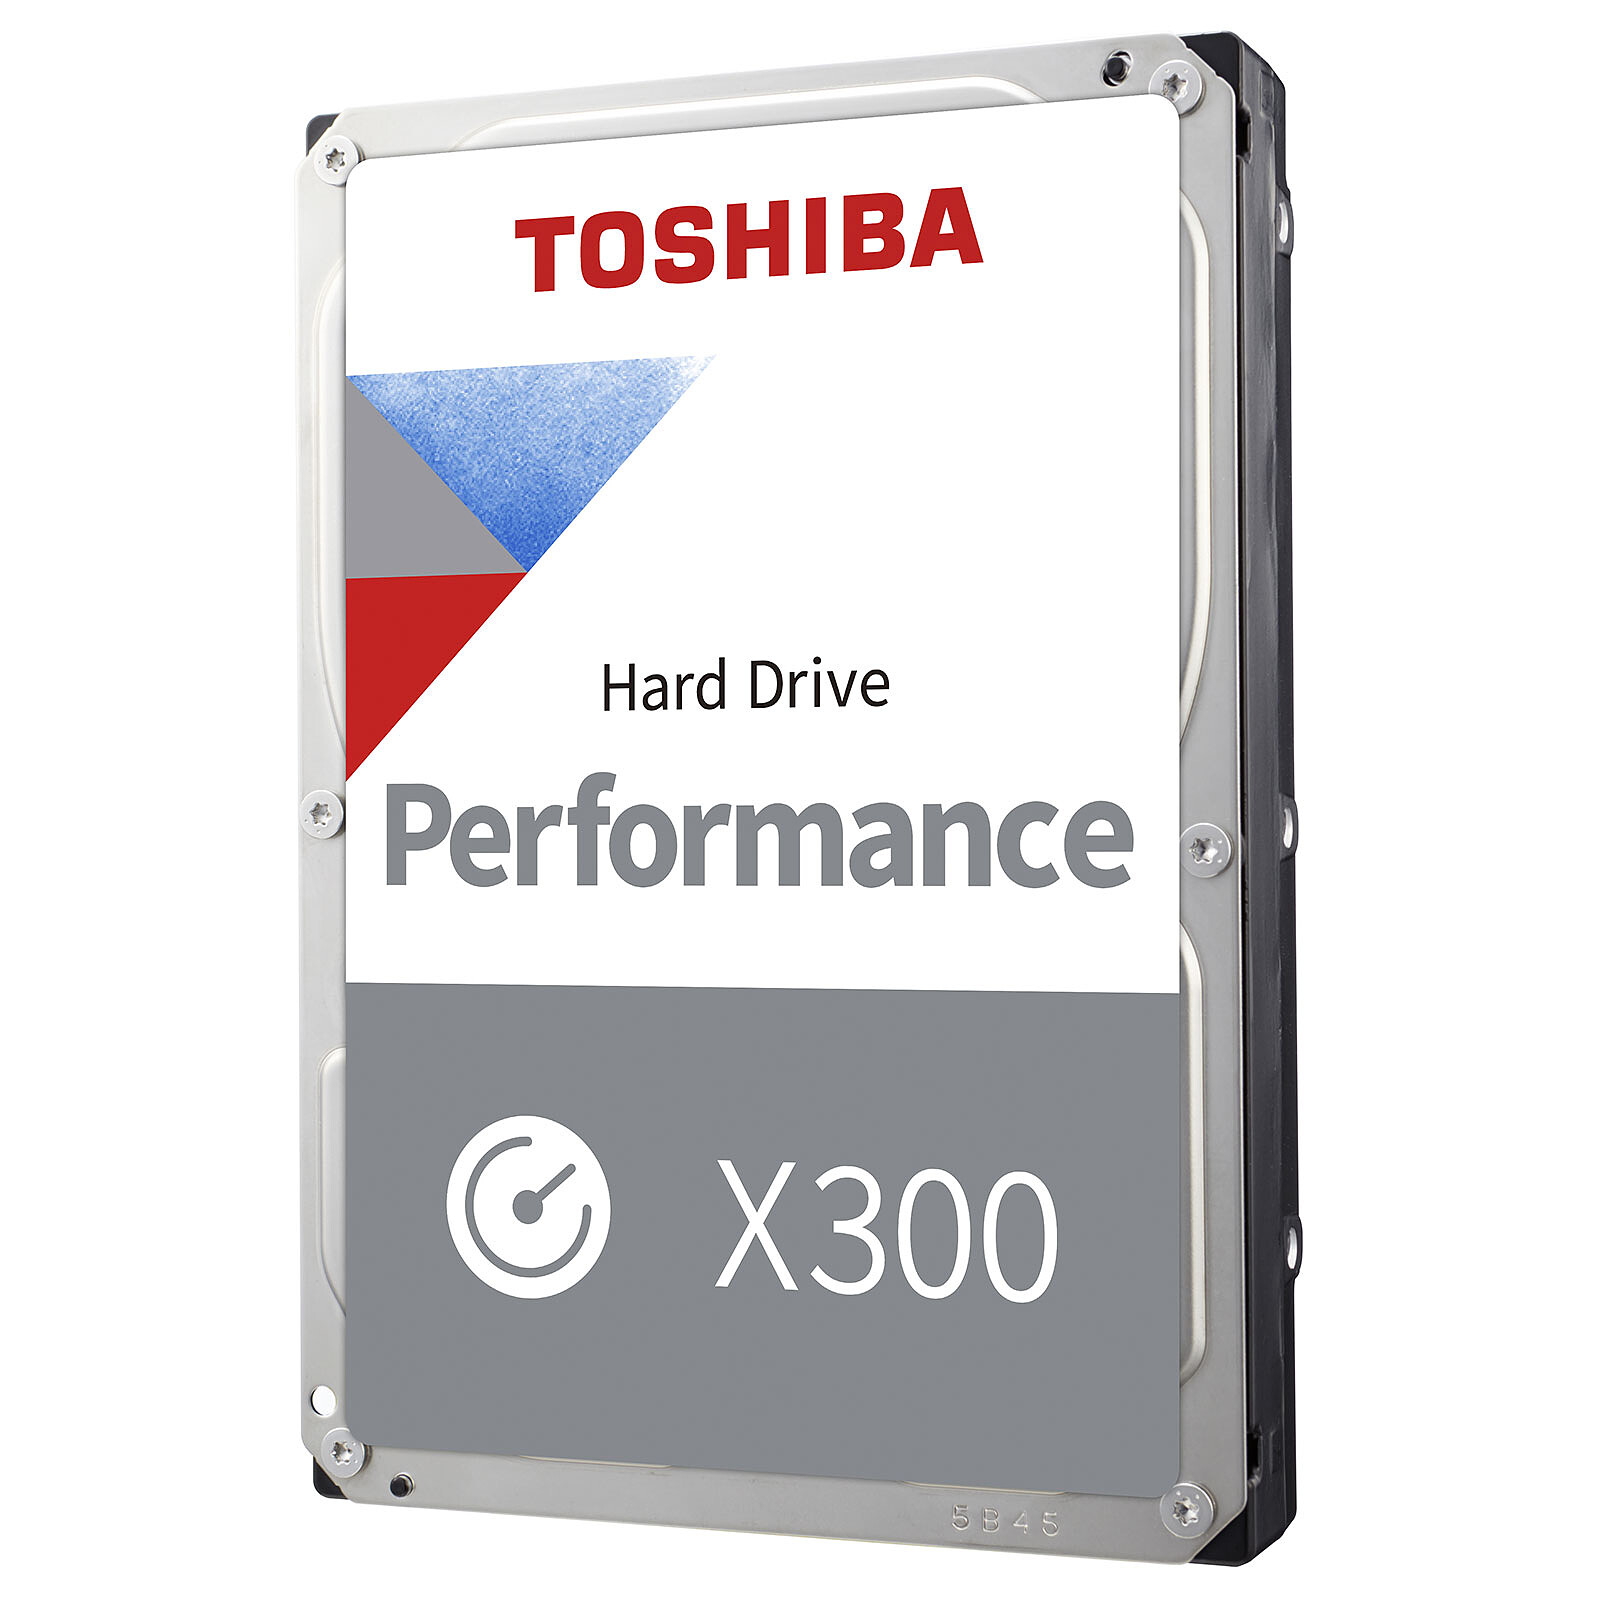 Toshiba X300 10 TB - Internal hard drive - LDLC 3-year warranty